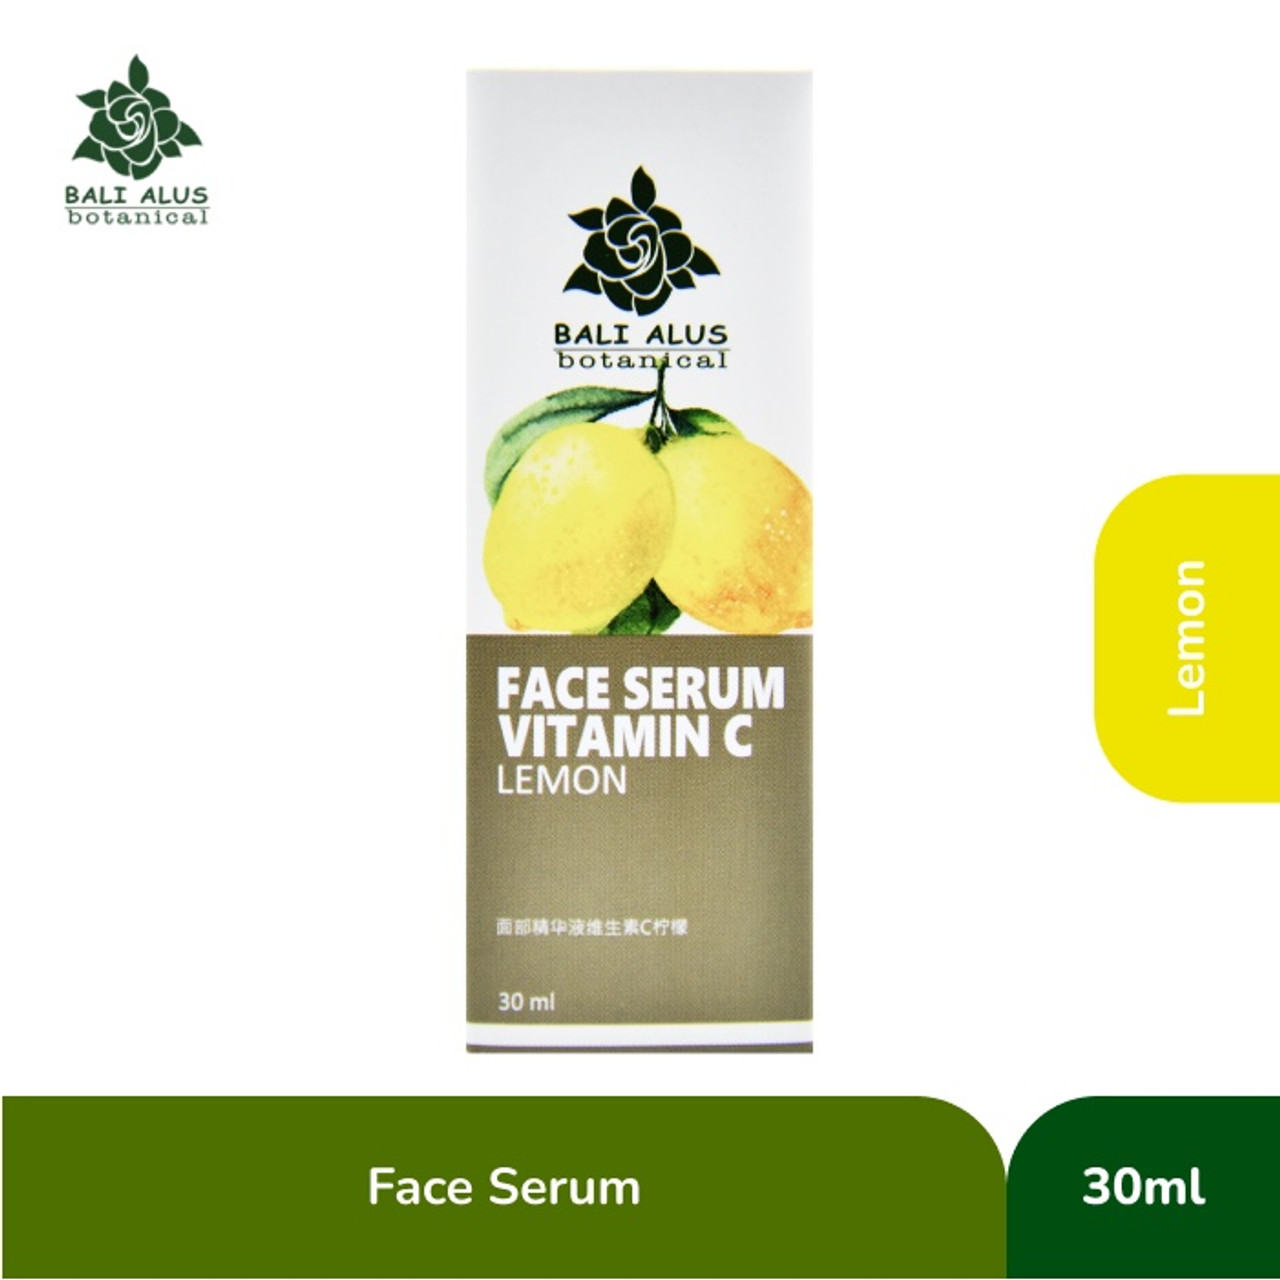 Bali Alus Face Serum Lemon, 30ml